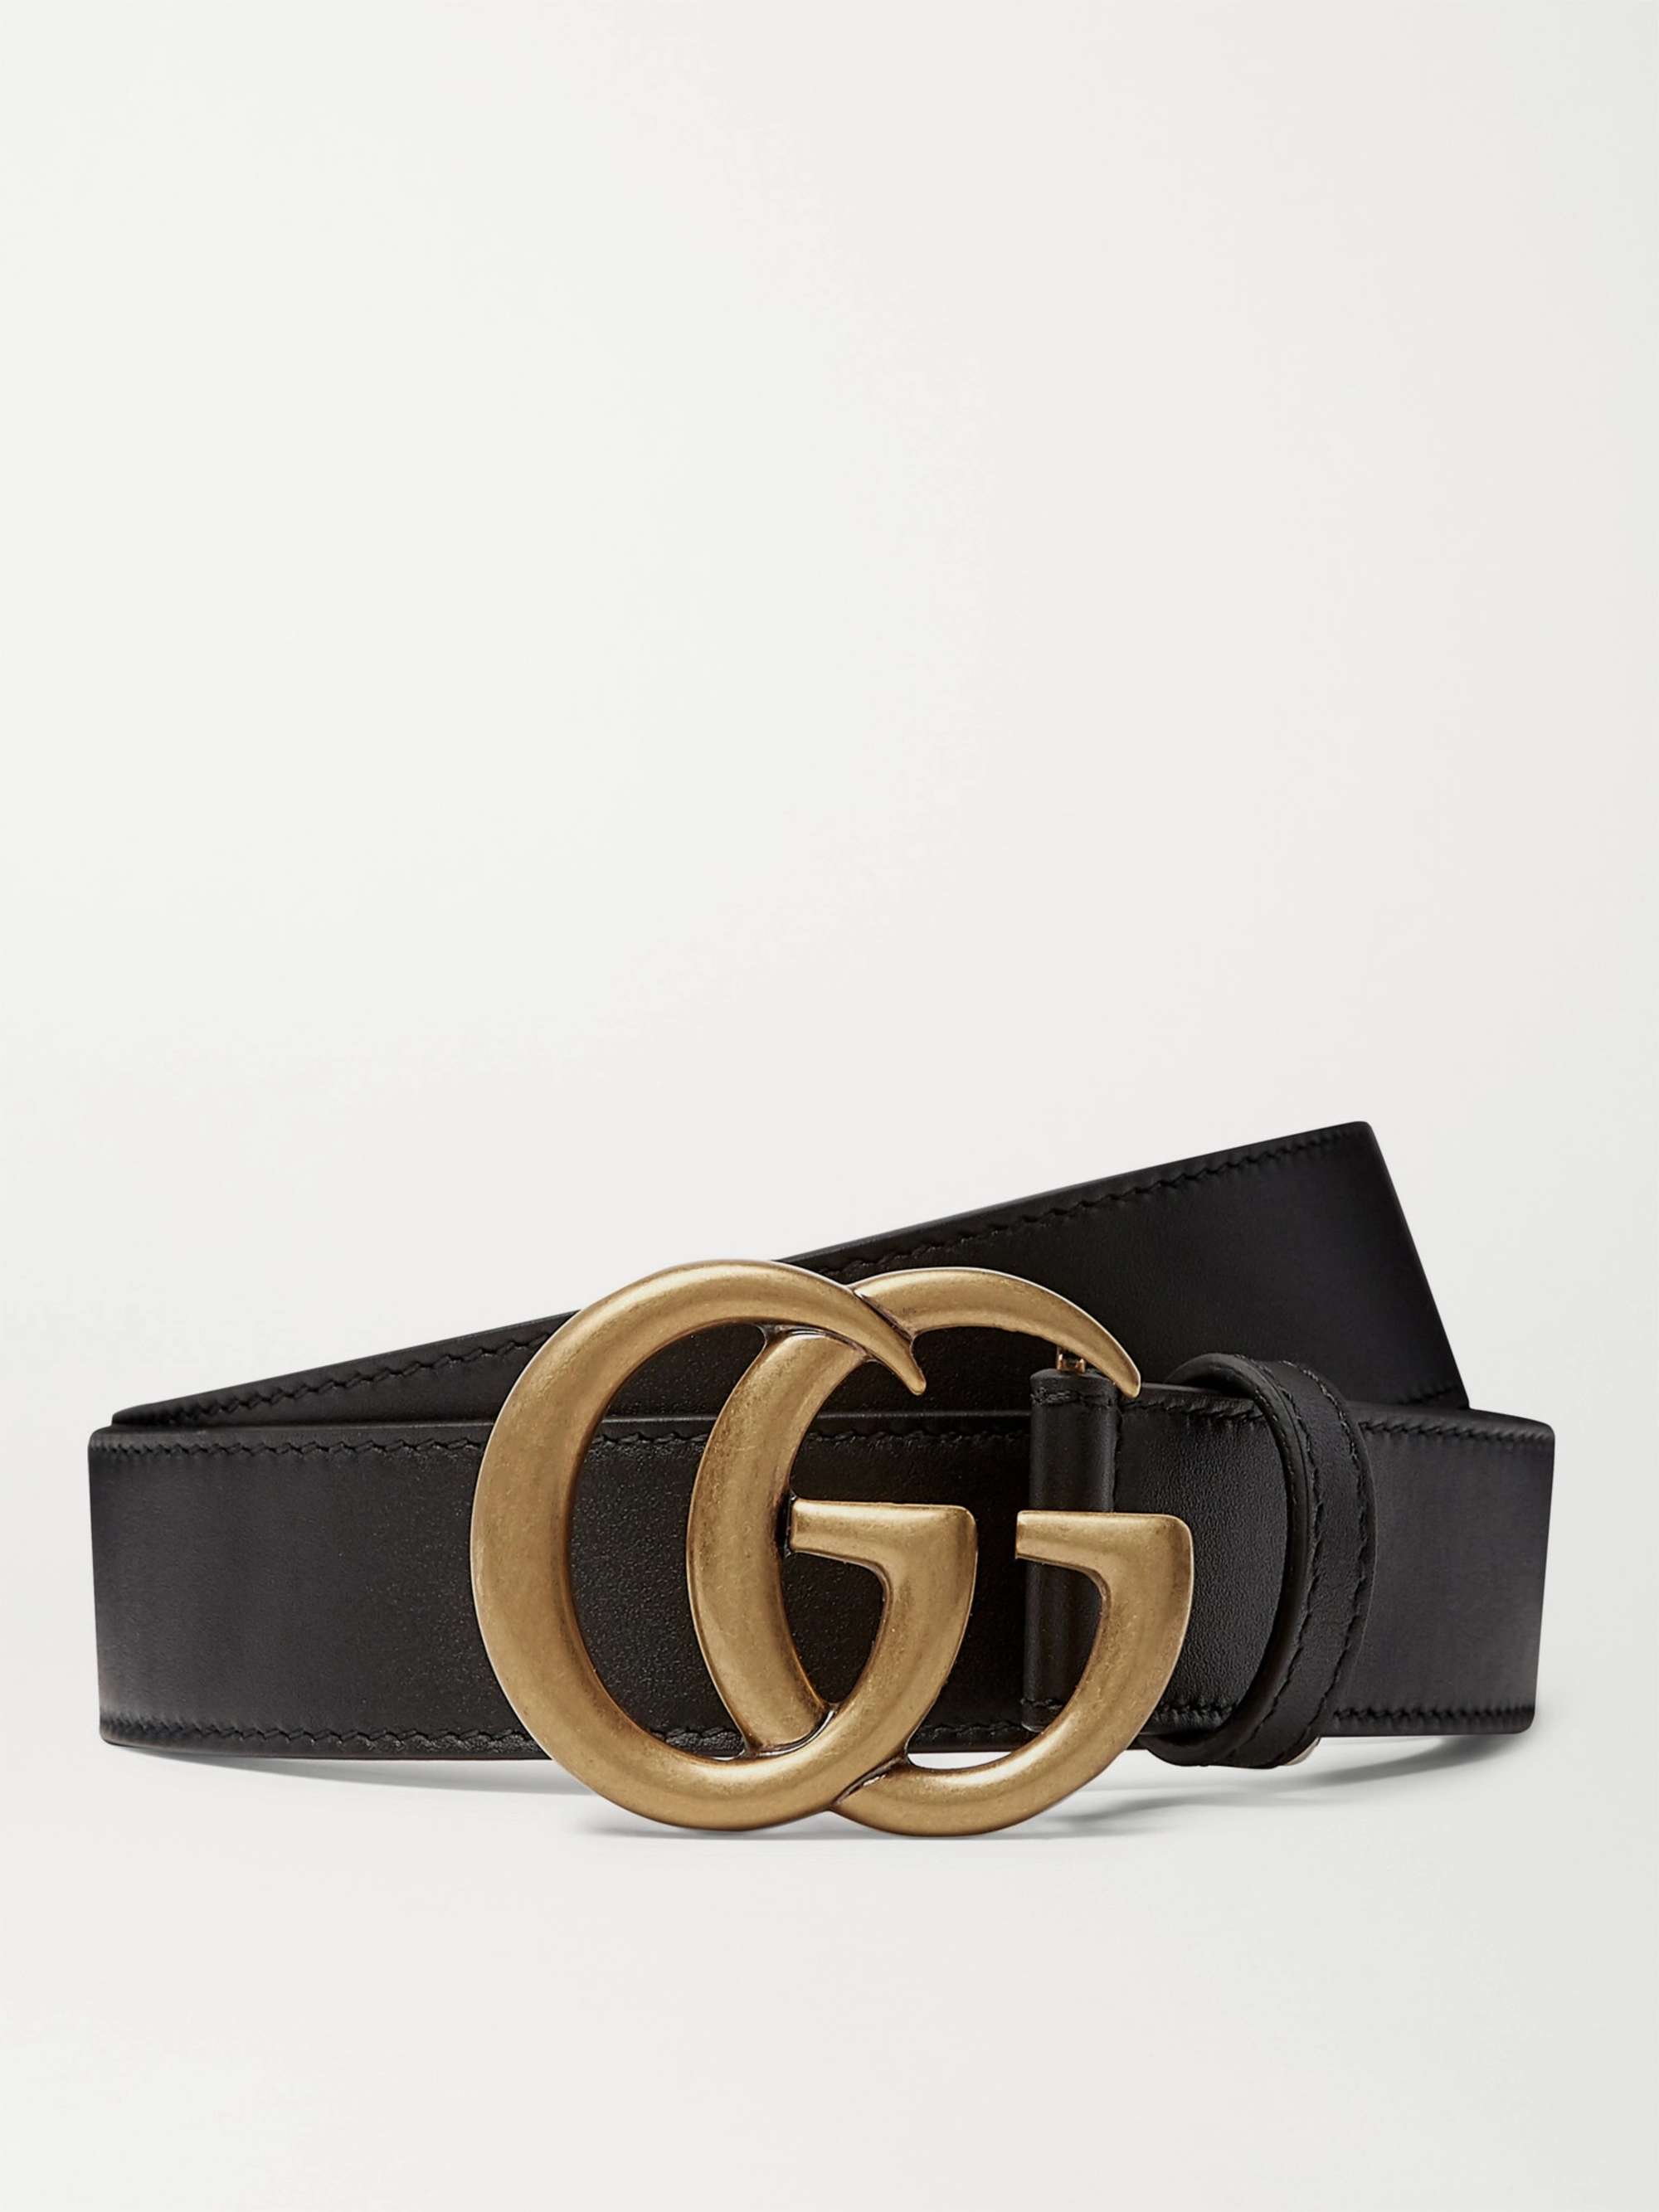 Still Worth Investing in a Gucci Belt? - Sydne Style